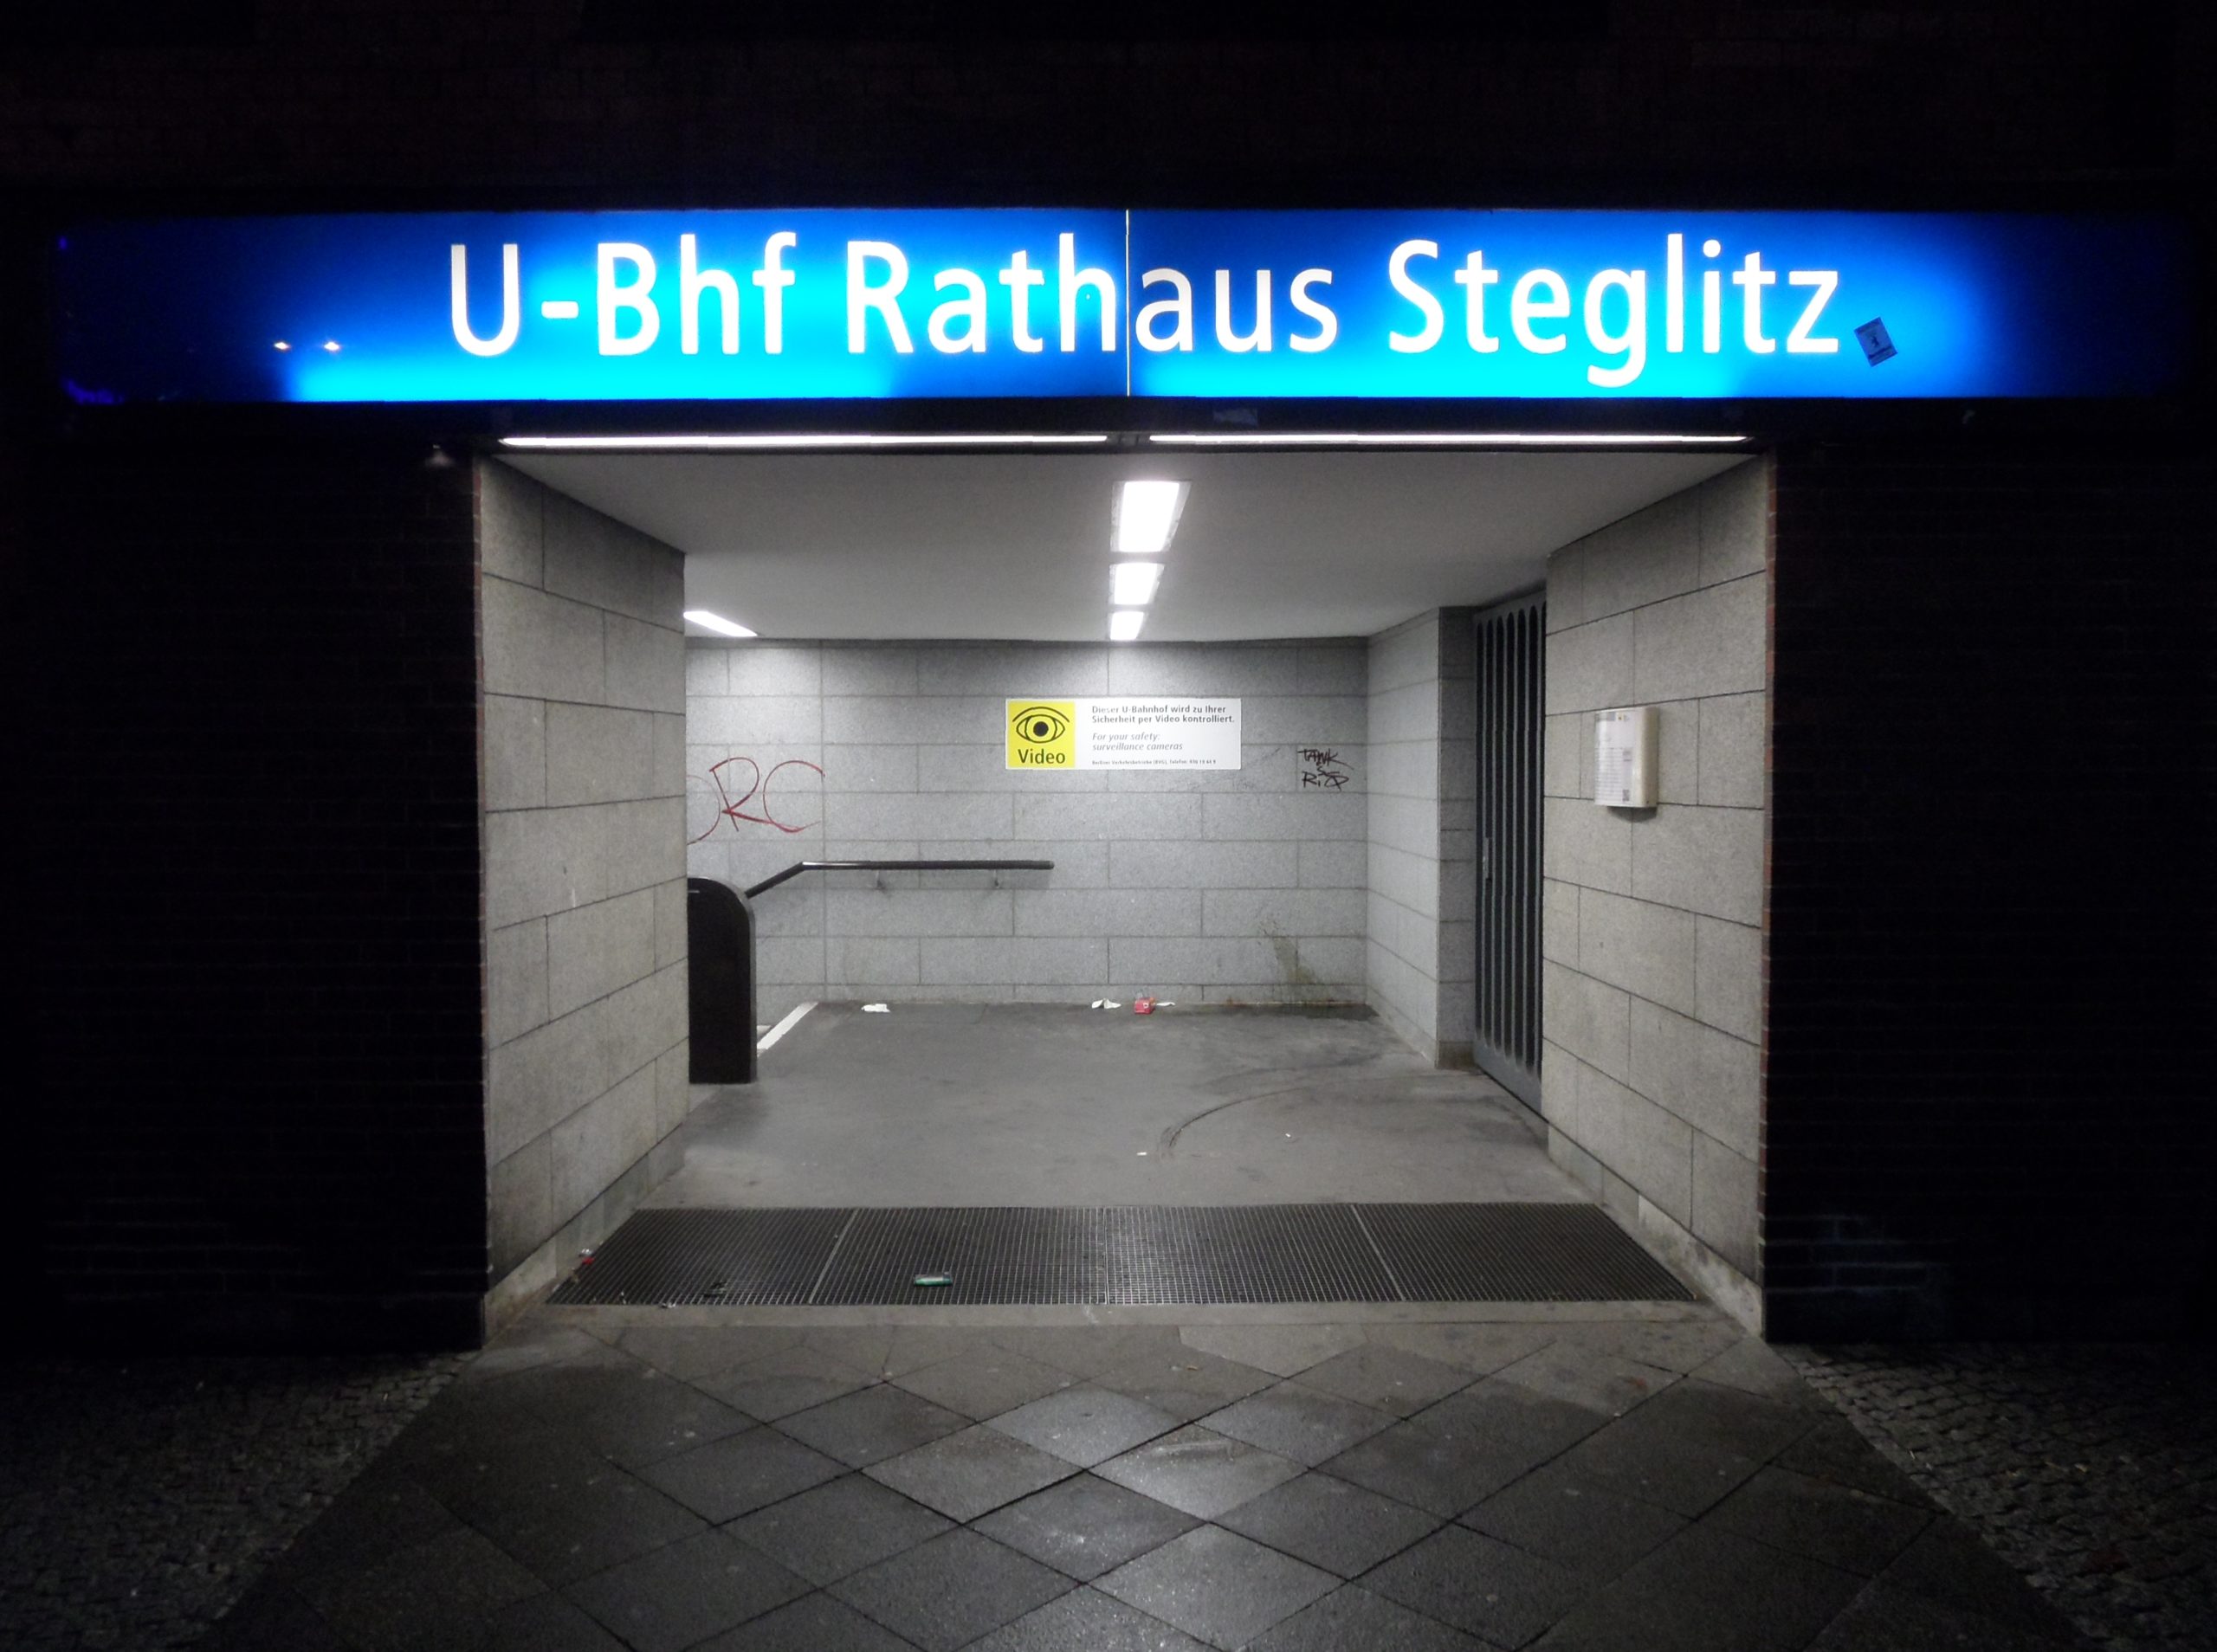 Endstation: Am Rathaus Steglitz endet die U9.Foto: IngolfBLN/Wikimedia/CC BY-SA 2.0